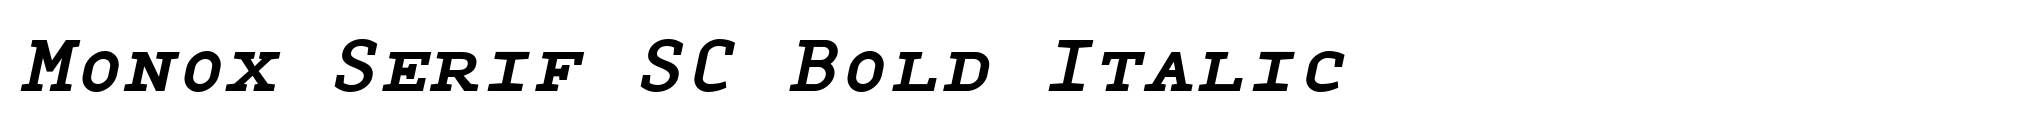 Monox Serif SC Bold Italic image